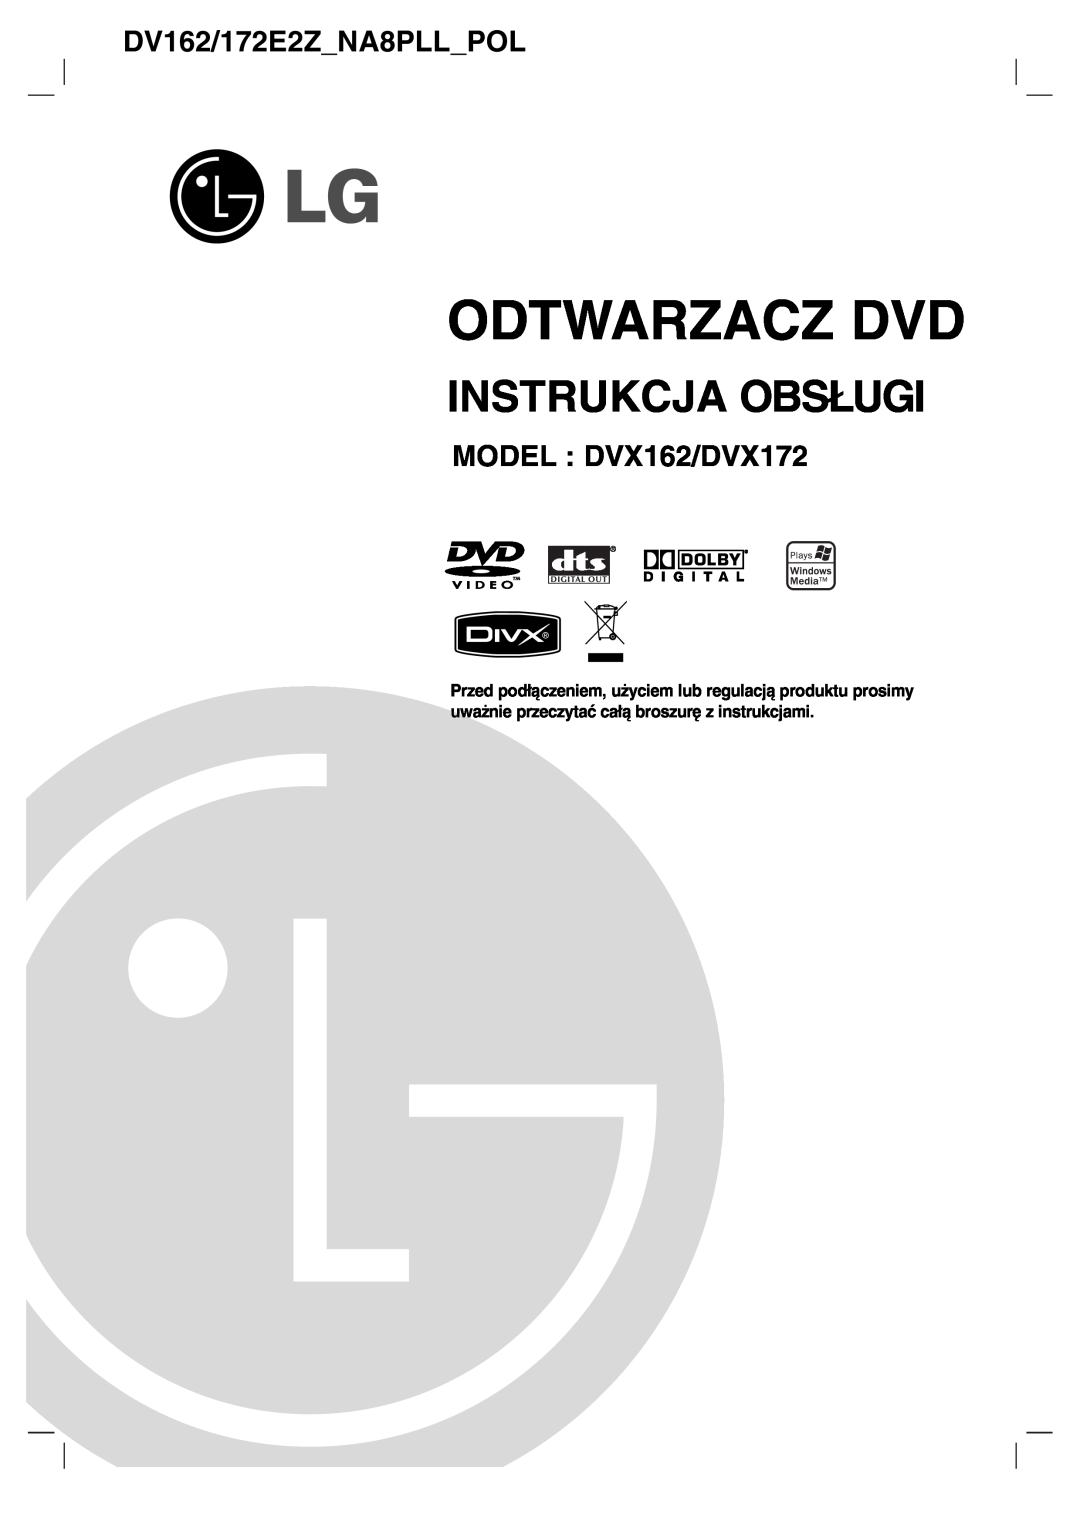 LG Electronics owner manual Instrukcja Obsługi, Odtwarzacz Dvd, DV162/172E2ZNA8PLLPOL, MODEL DVX162/DVX172 